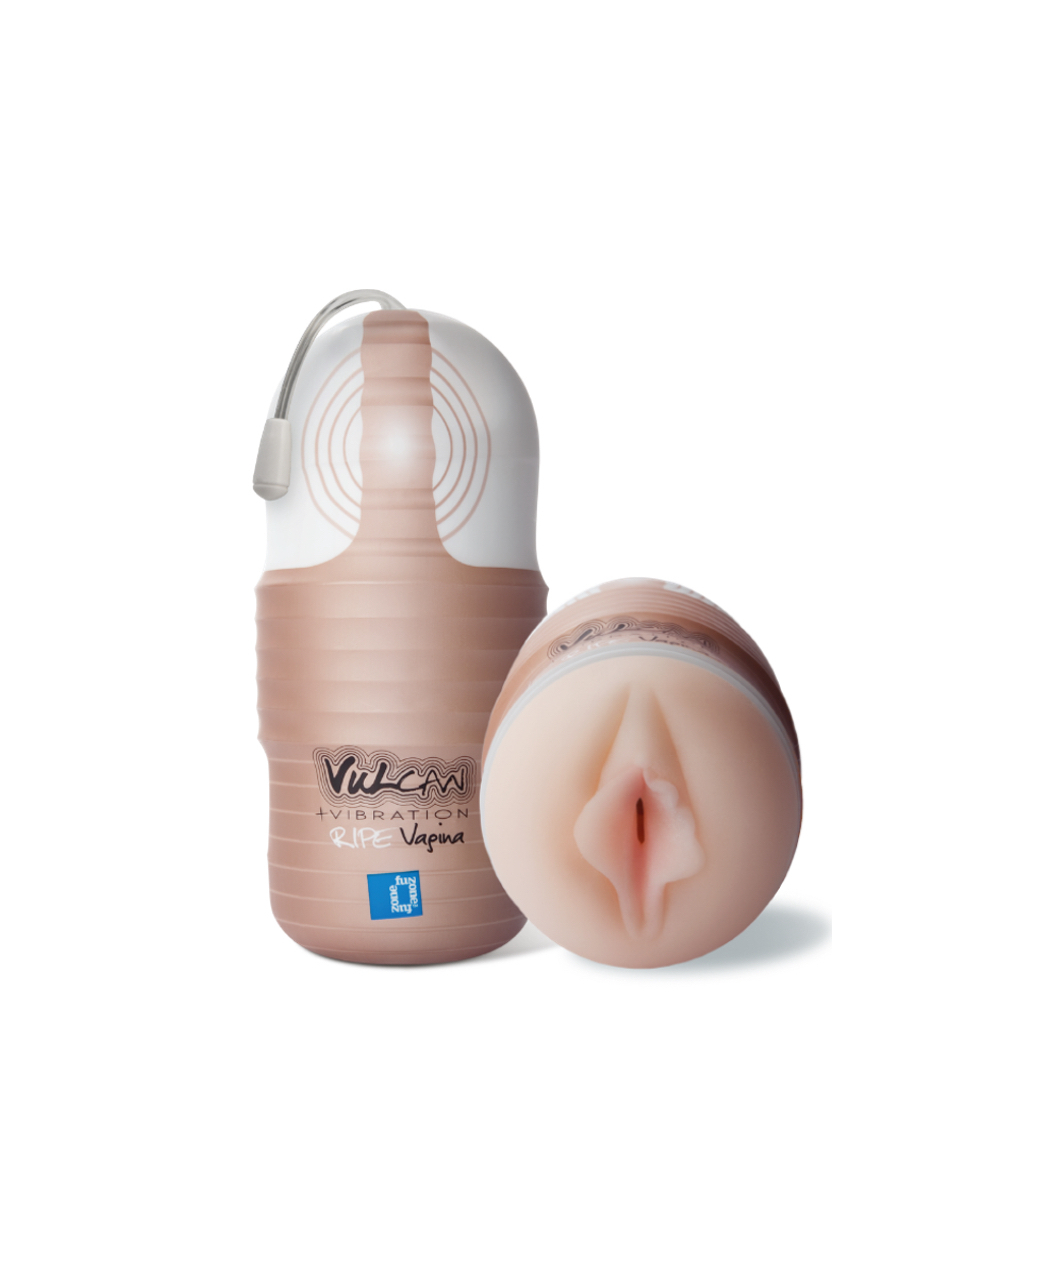 Vulcan Vibration Ripe Vagina vibromasturbators